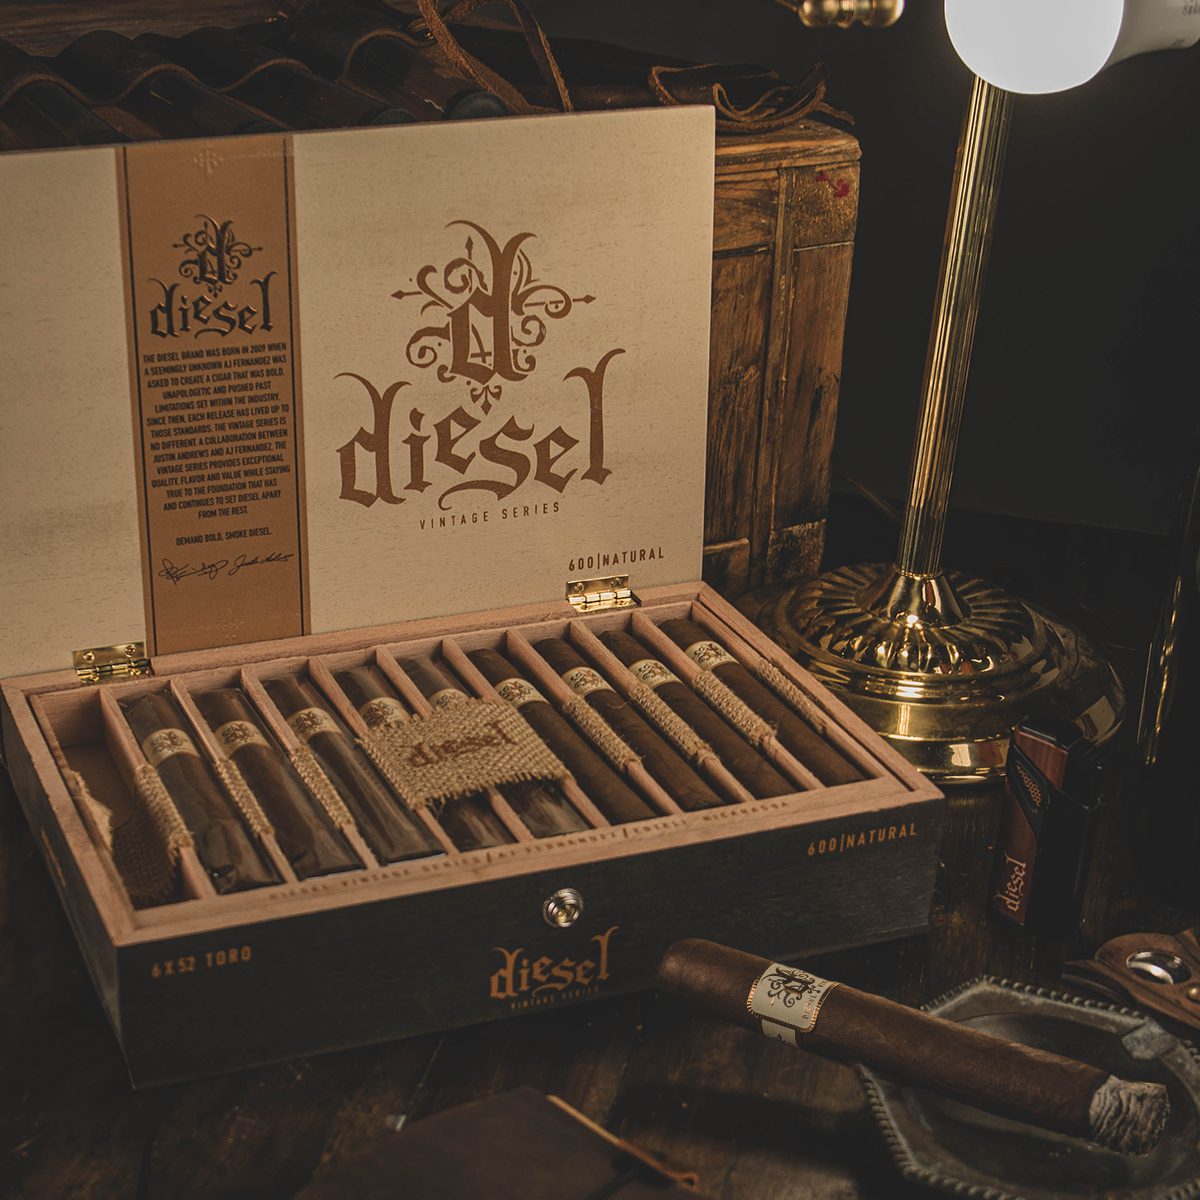 diesel-vintage-series-natural-set-for-march-release-–-cigar-news